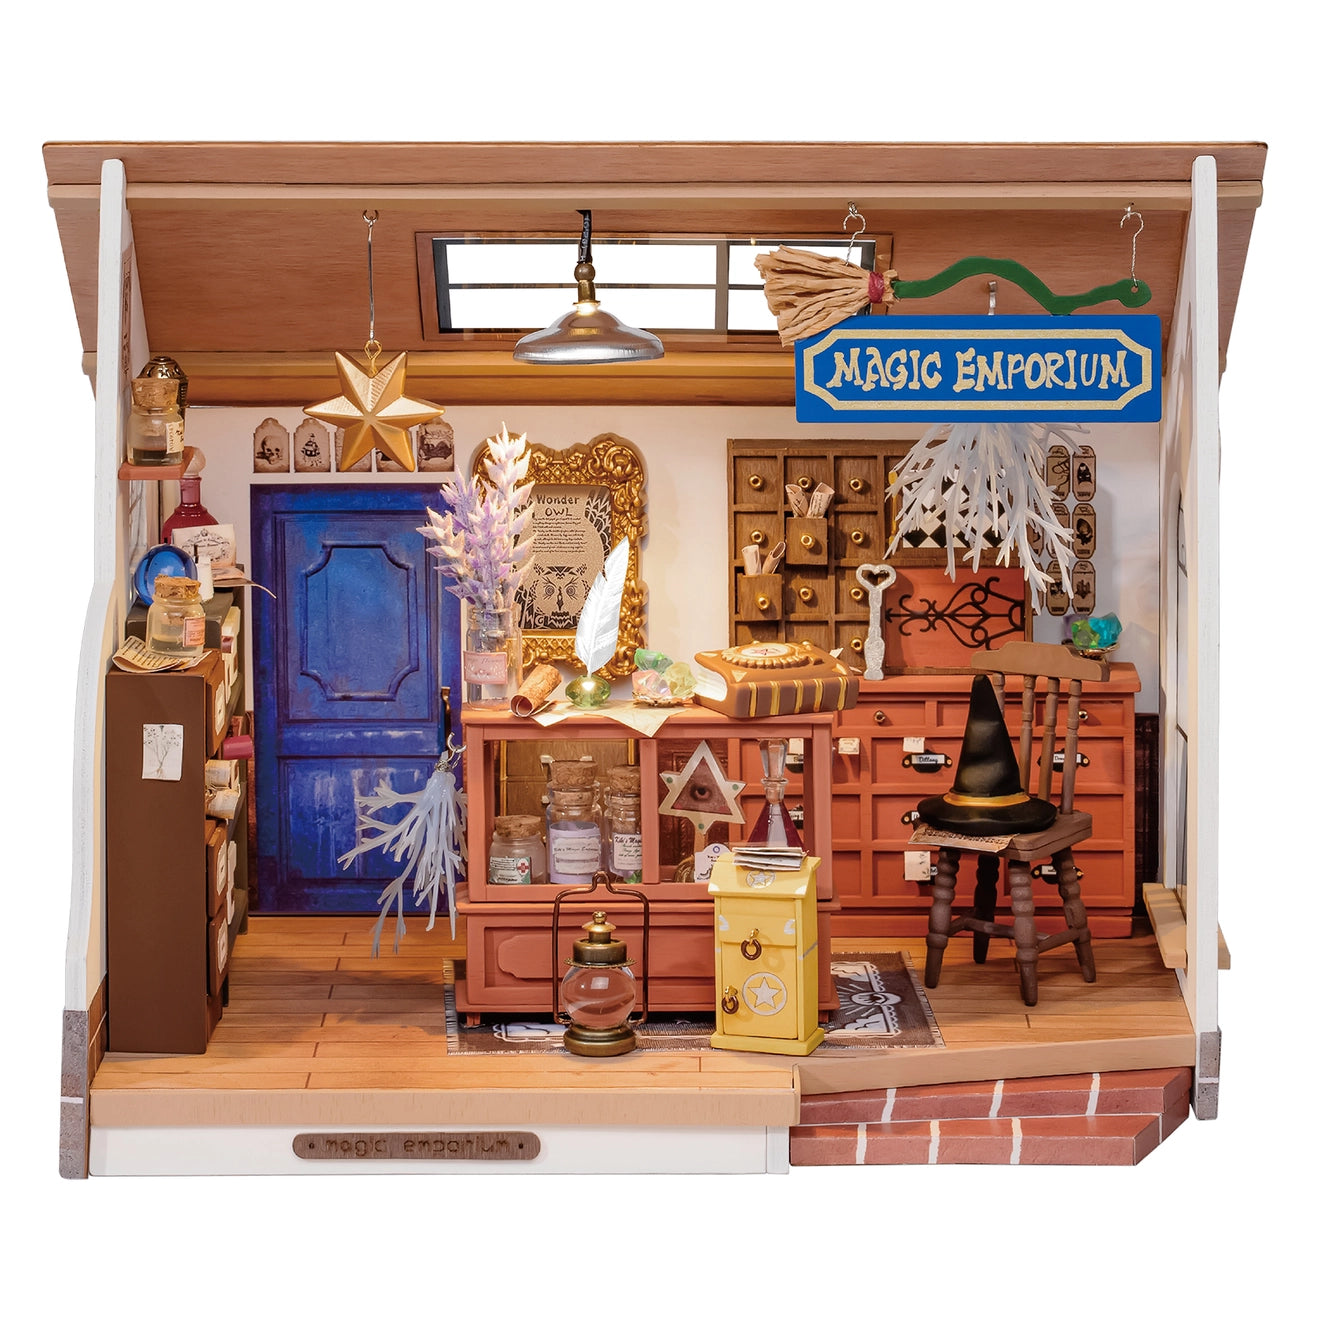 Kiki's Magic Emporium Diy Miniature House Wooden